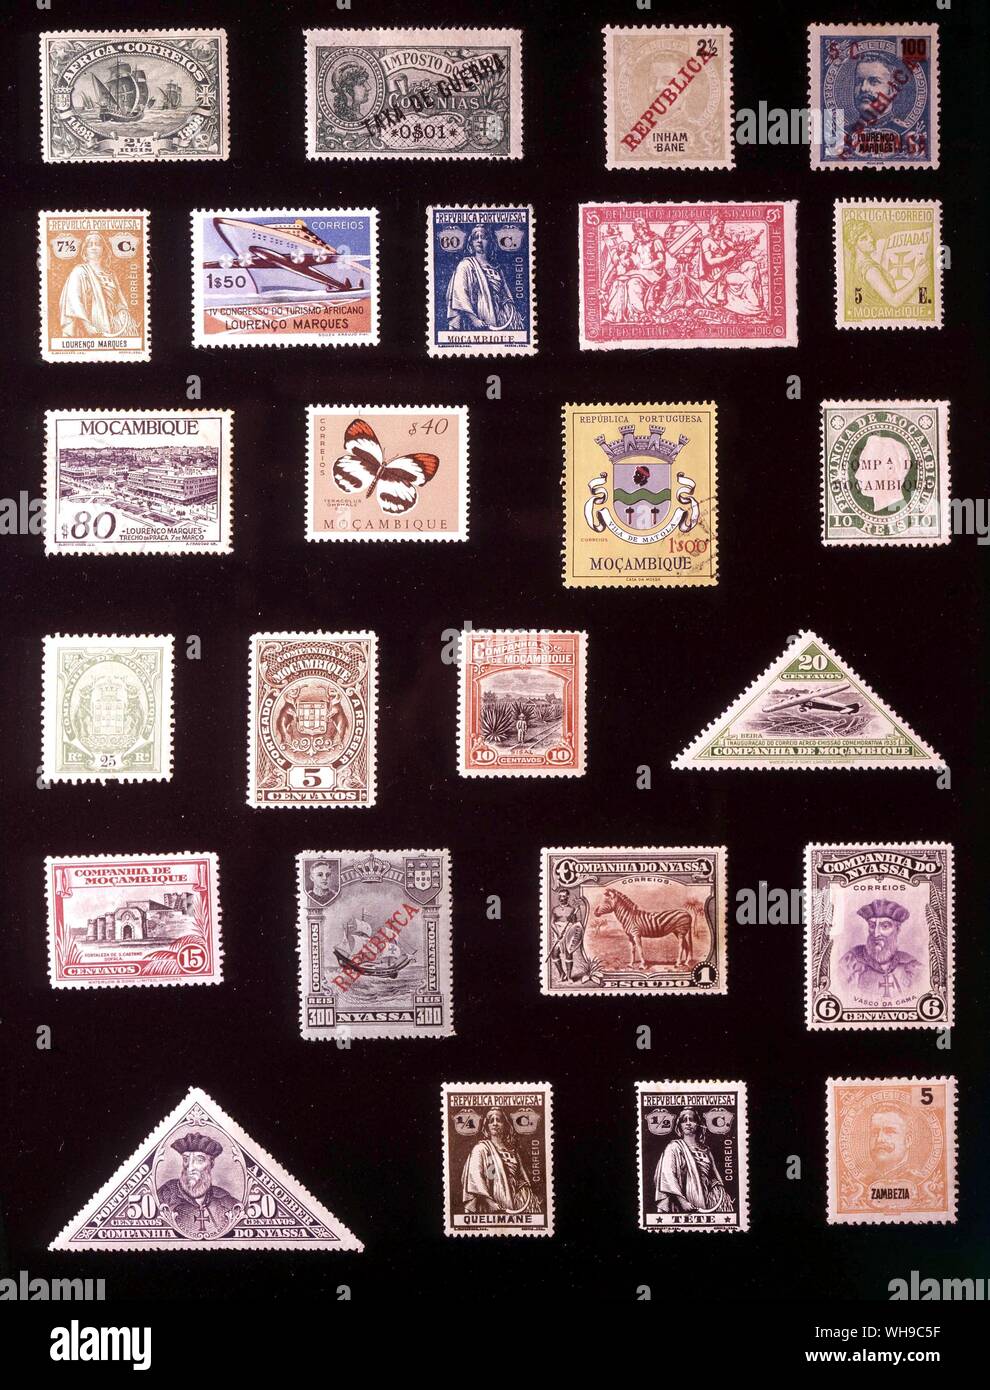 AFRICA - Portoghese IN AFRICA ORIENTALE: (da sinistra a destra) 1. Africa portoghese, 2,5 Reis, 1898, 2. Africa portoghese, 1 centavo, 1919, 3. Inhambane, 2,5 Reis, 1911, 4. Kionga, 5 centavos, 1916 5. Lourenco marques, 7.5 centavos, 1914, 6. Lourenco marques, 1,50 escudos, 1952, 7. Mozambico, 60 centavos, 1922, 8. Mozambico, 5 centavos, 1916 9. Mozambico, 5 escudos, 1933, 10. Mozambico, 5 escudos, 1933, 11. Mozambico, 80 centavos, 1948, 12. Mozambico, 1 escudo, 1961, 13. Mozambico Company, 10 Reis, 1892, 14. Mozambico Company, 25 Reis, 1895, 15. Mozambico Company, 5 centavos, 1919, 16. Foto Stock